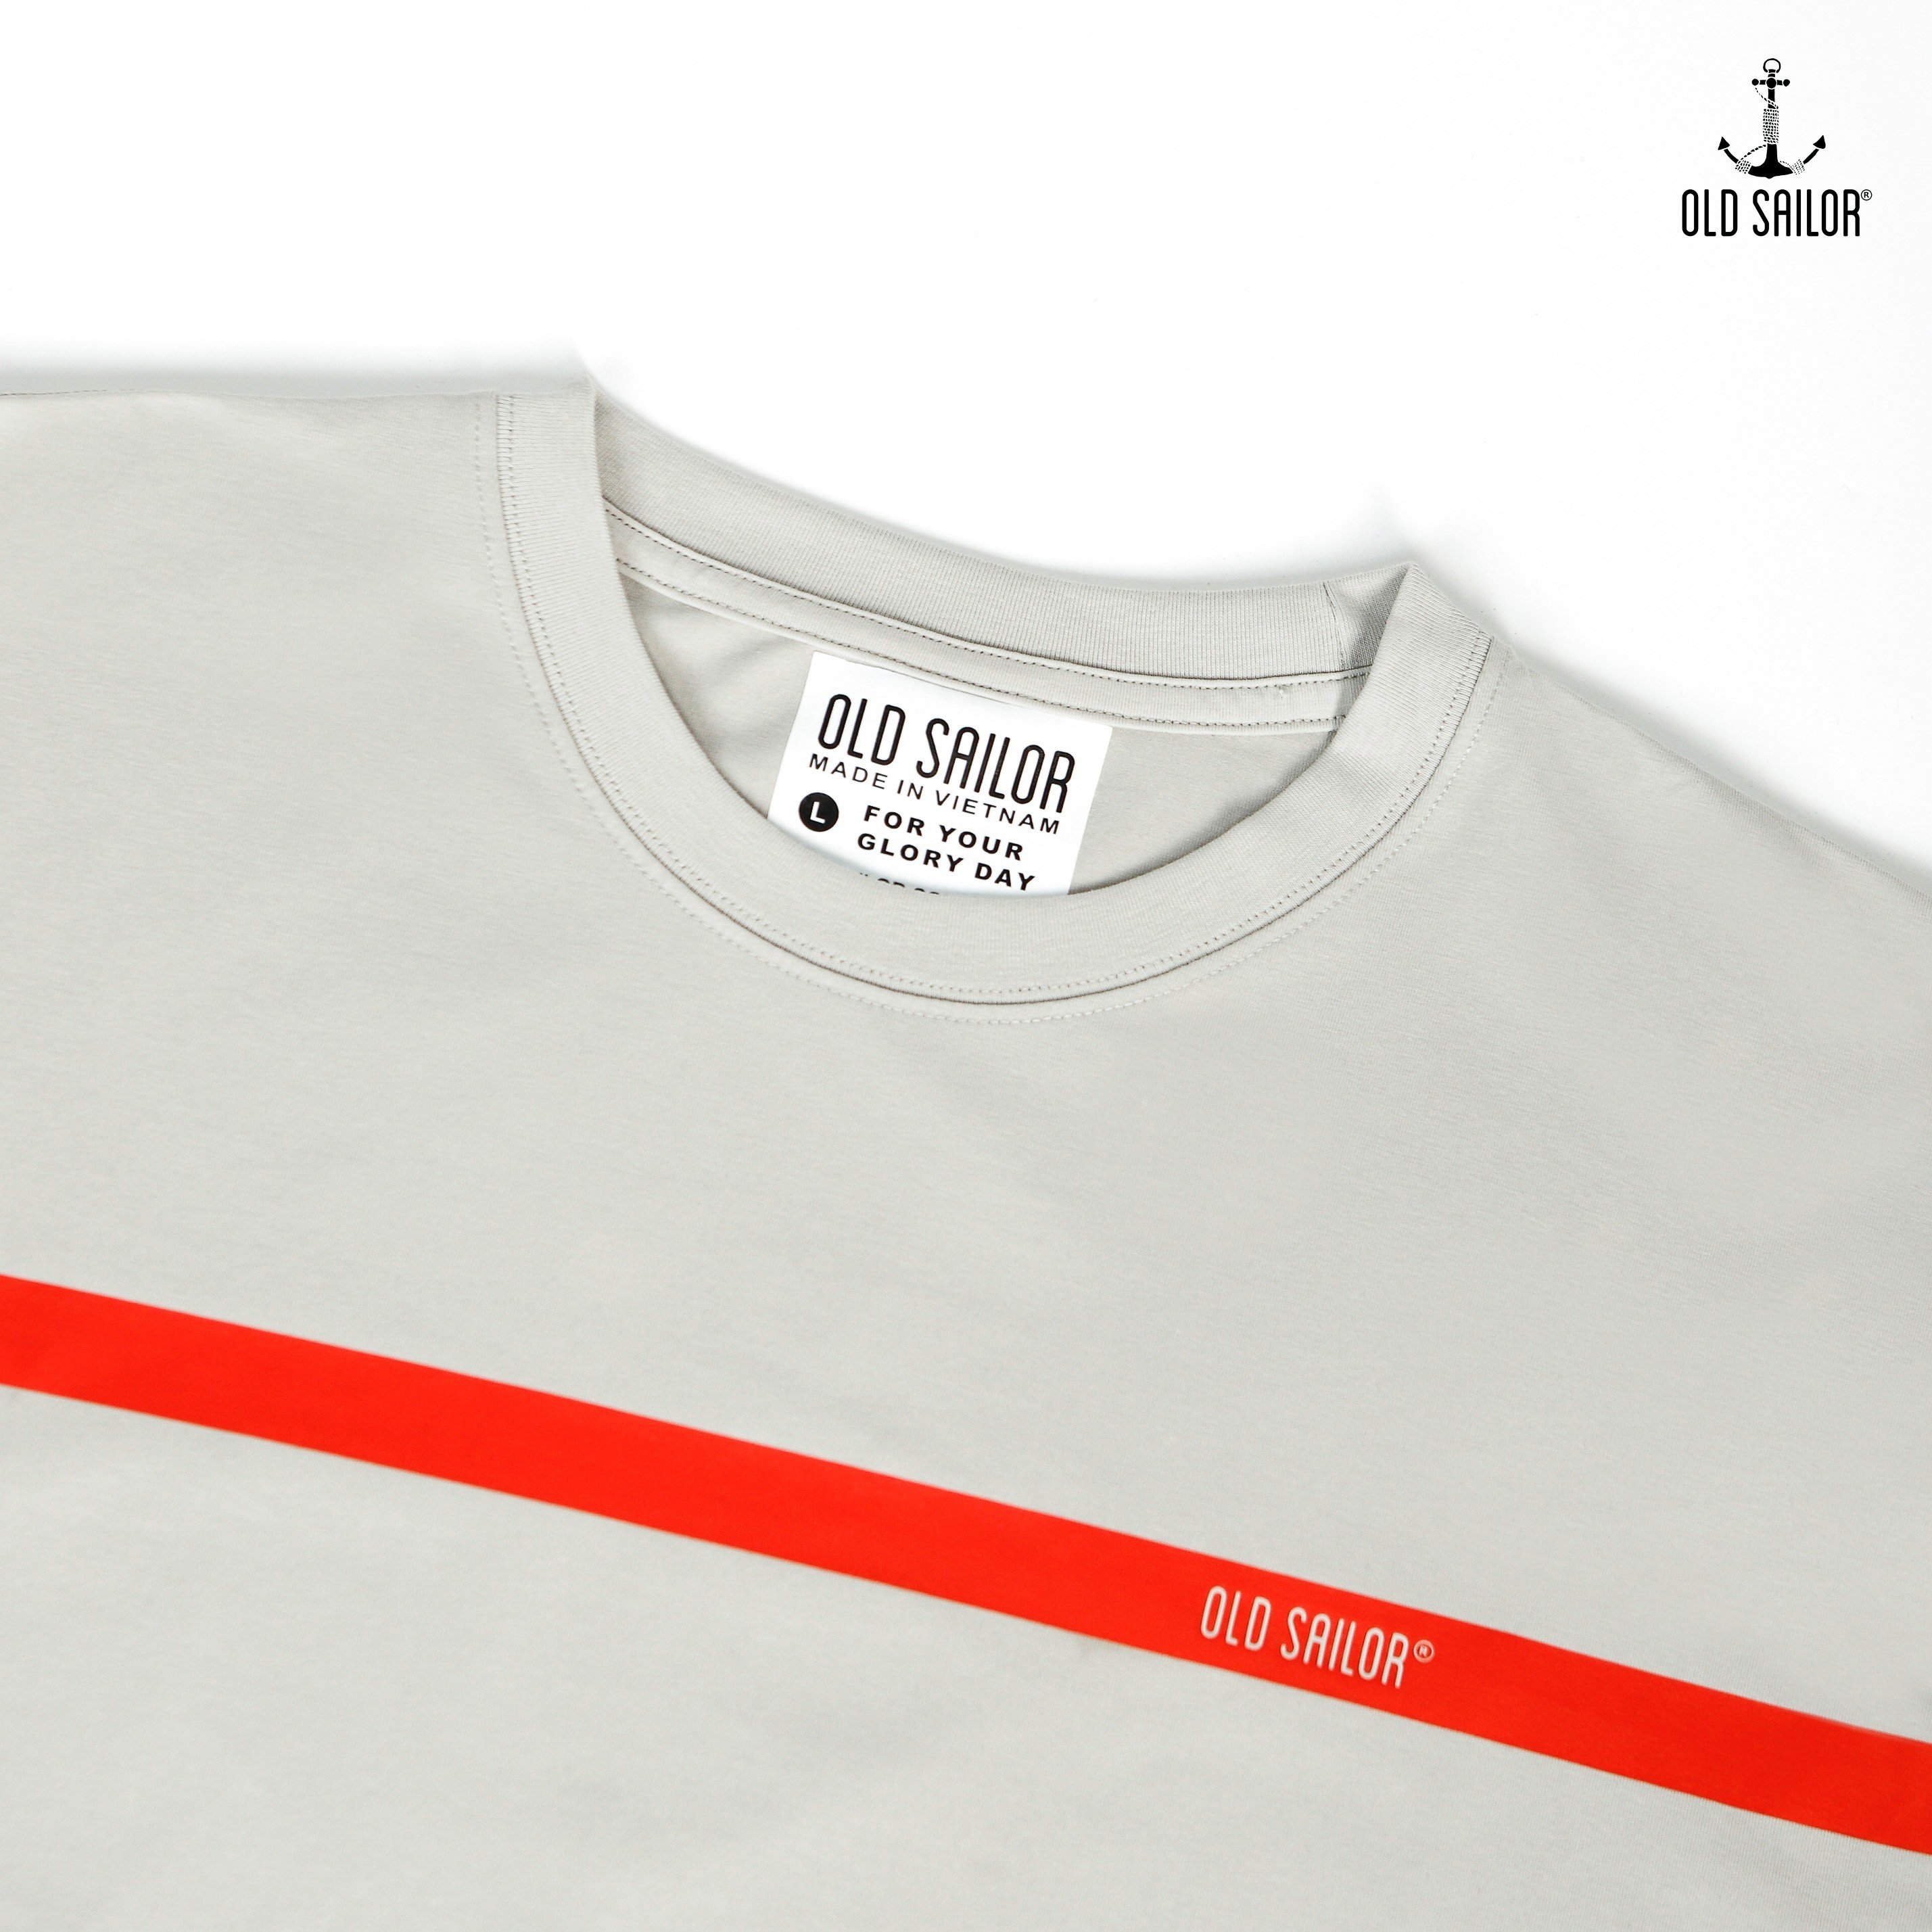 Áo thun nam họa tiết Old Sailor - O.S.L RED LINE TEE - GREY - ATXA31004 - Big size upto 5XL